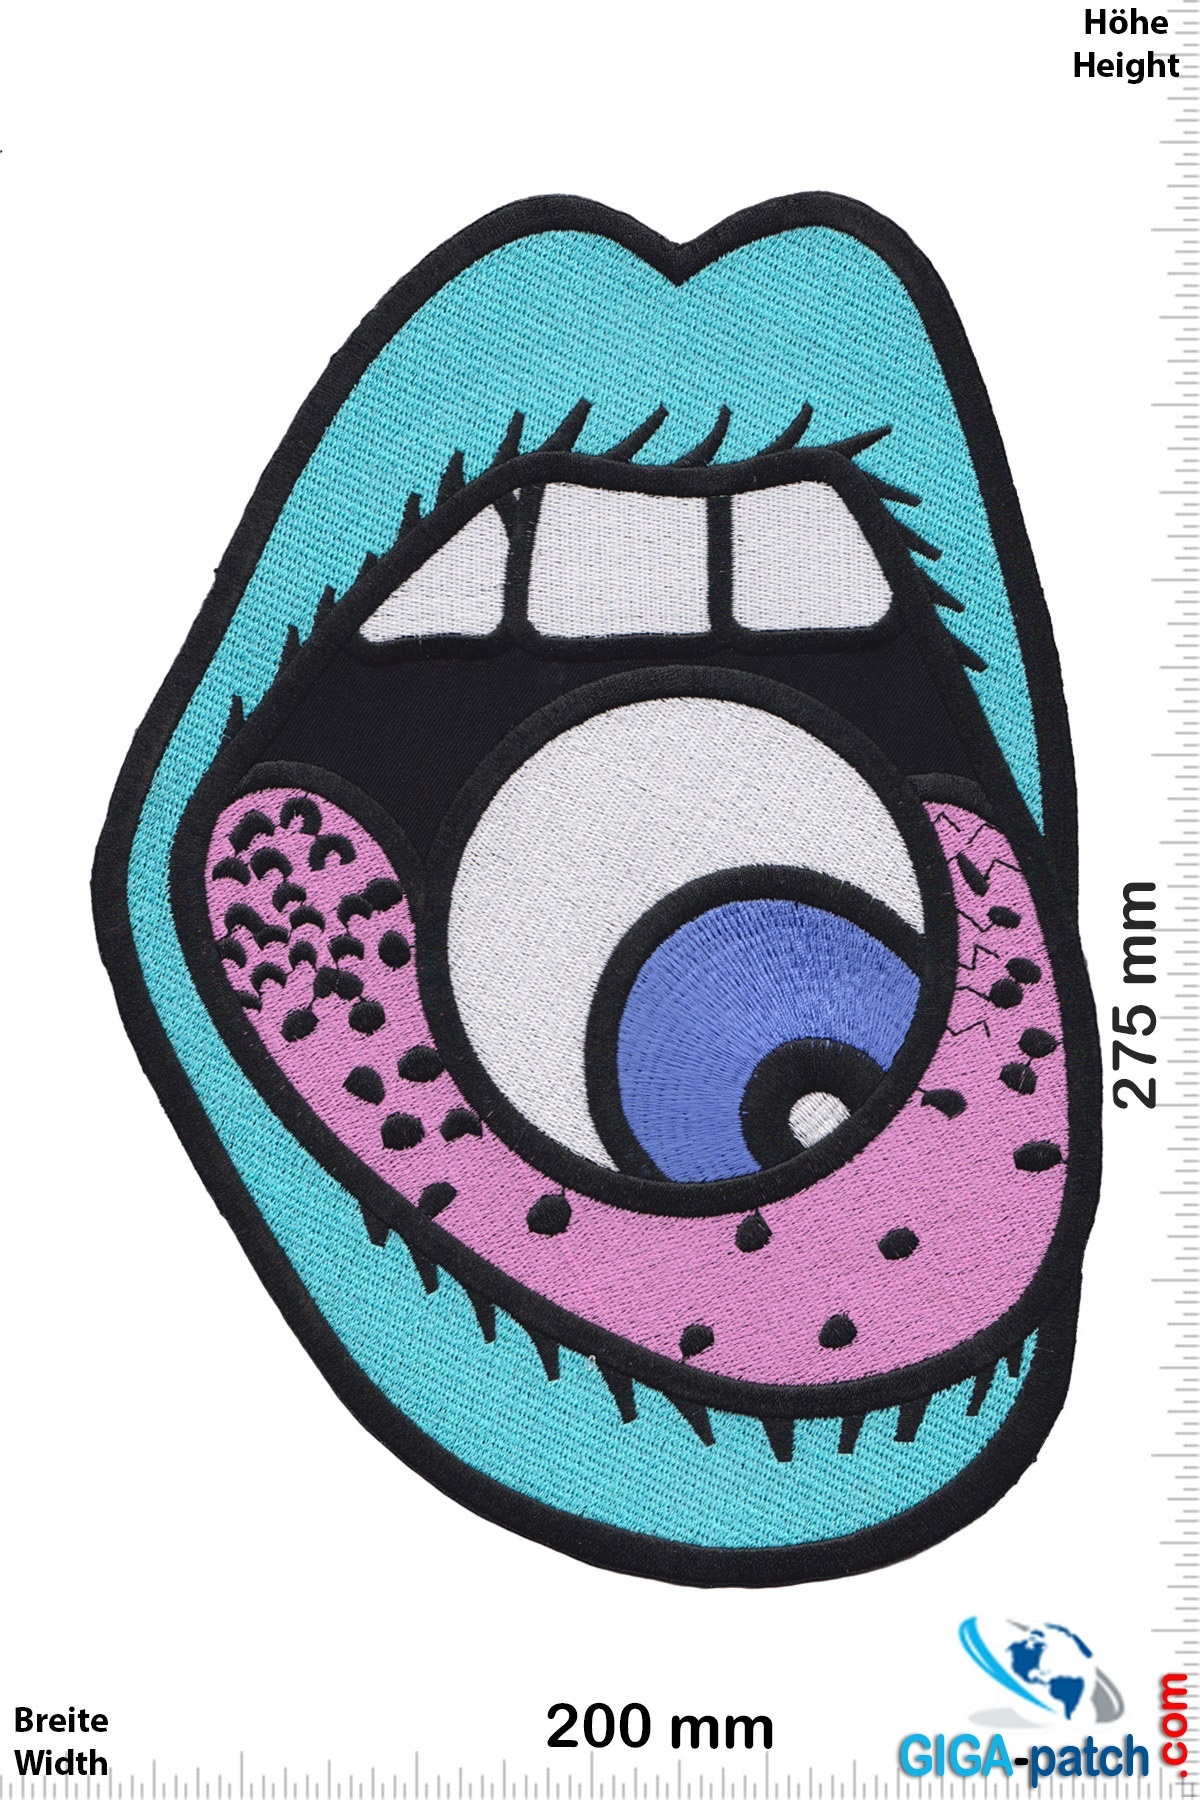 Mouth - Tongue - Eye  - 27 cm